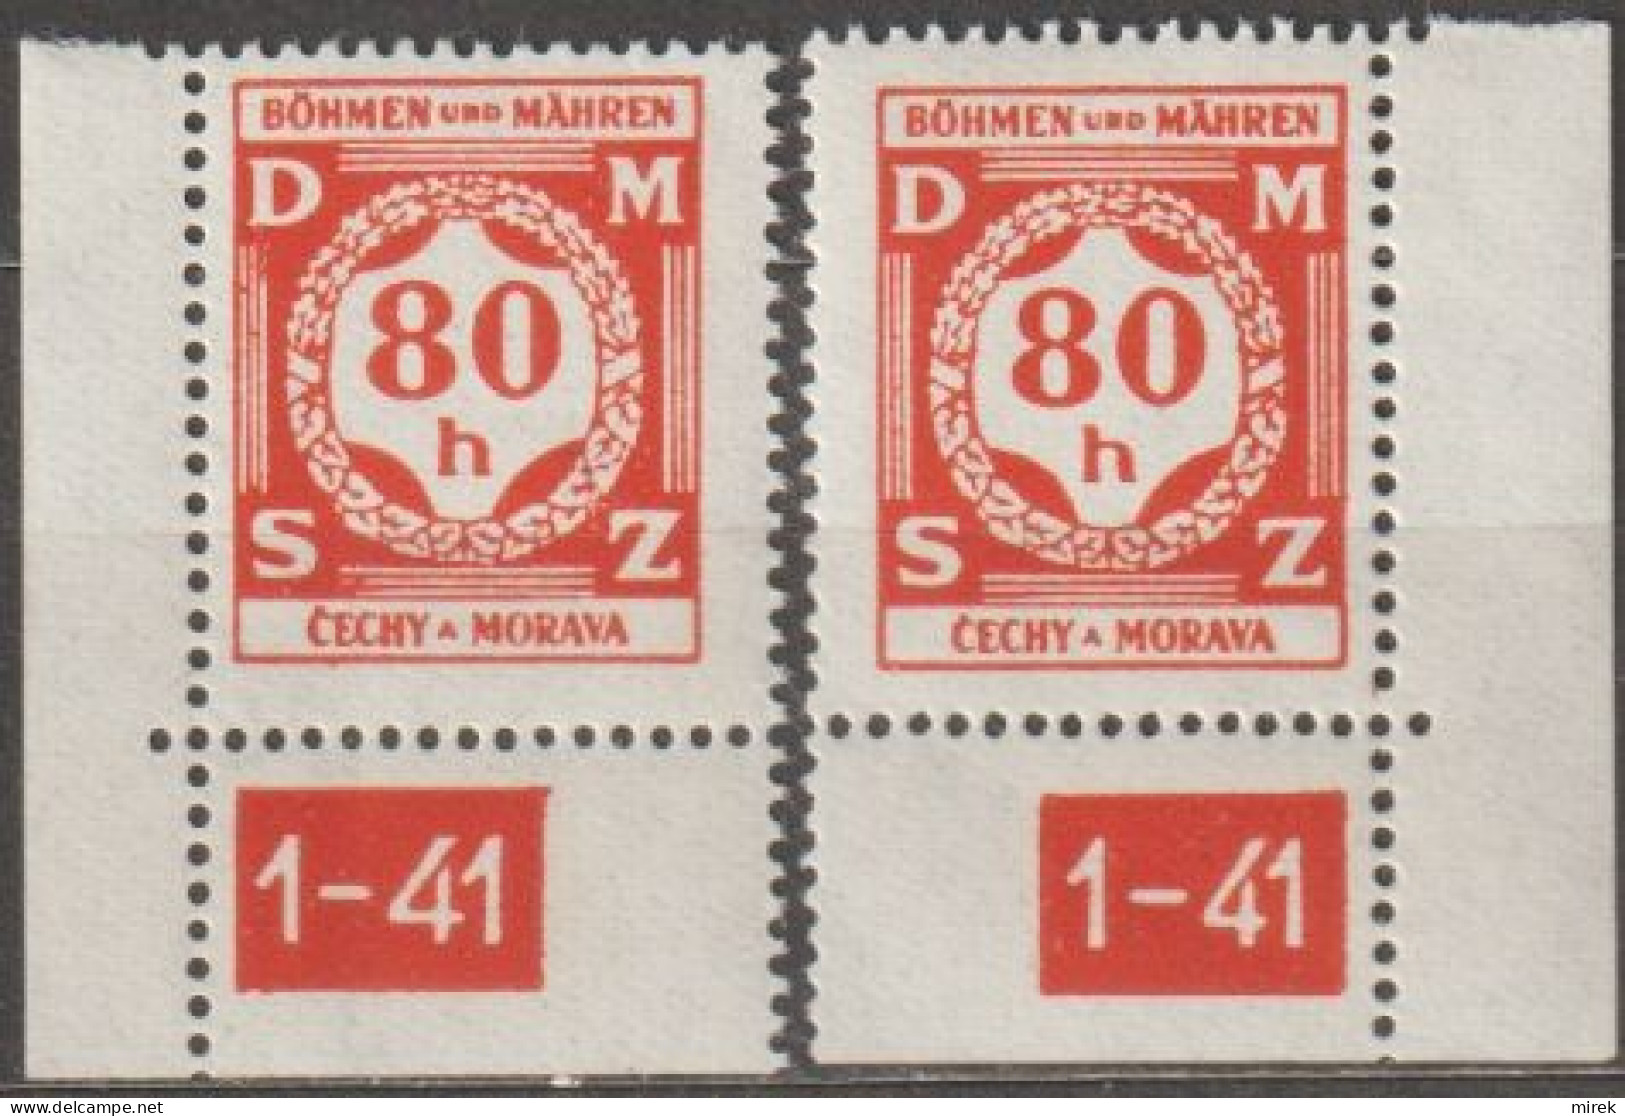 30a/ Pof. SL 5, Corner Stamps, Plate Number 1-41 - Unused Stamps